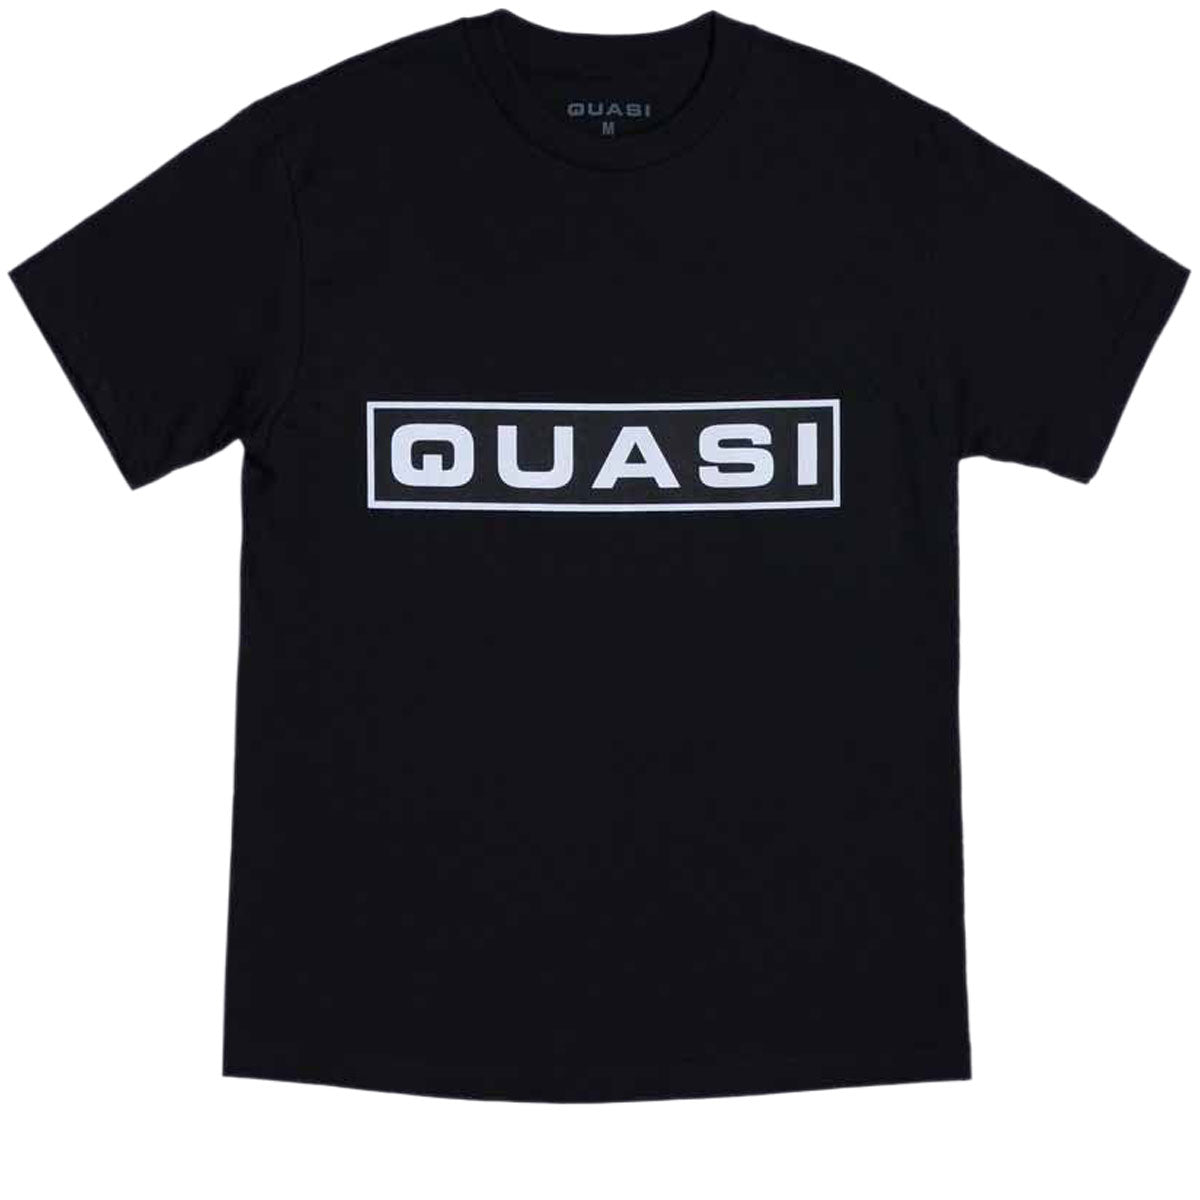 Quasi Bar Logo T-Shirt - Black image 1